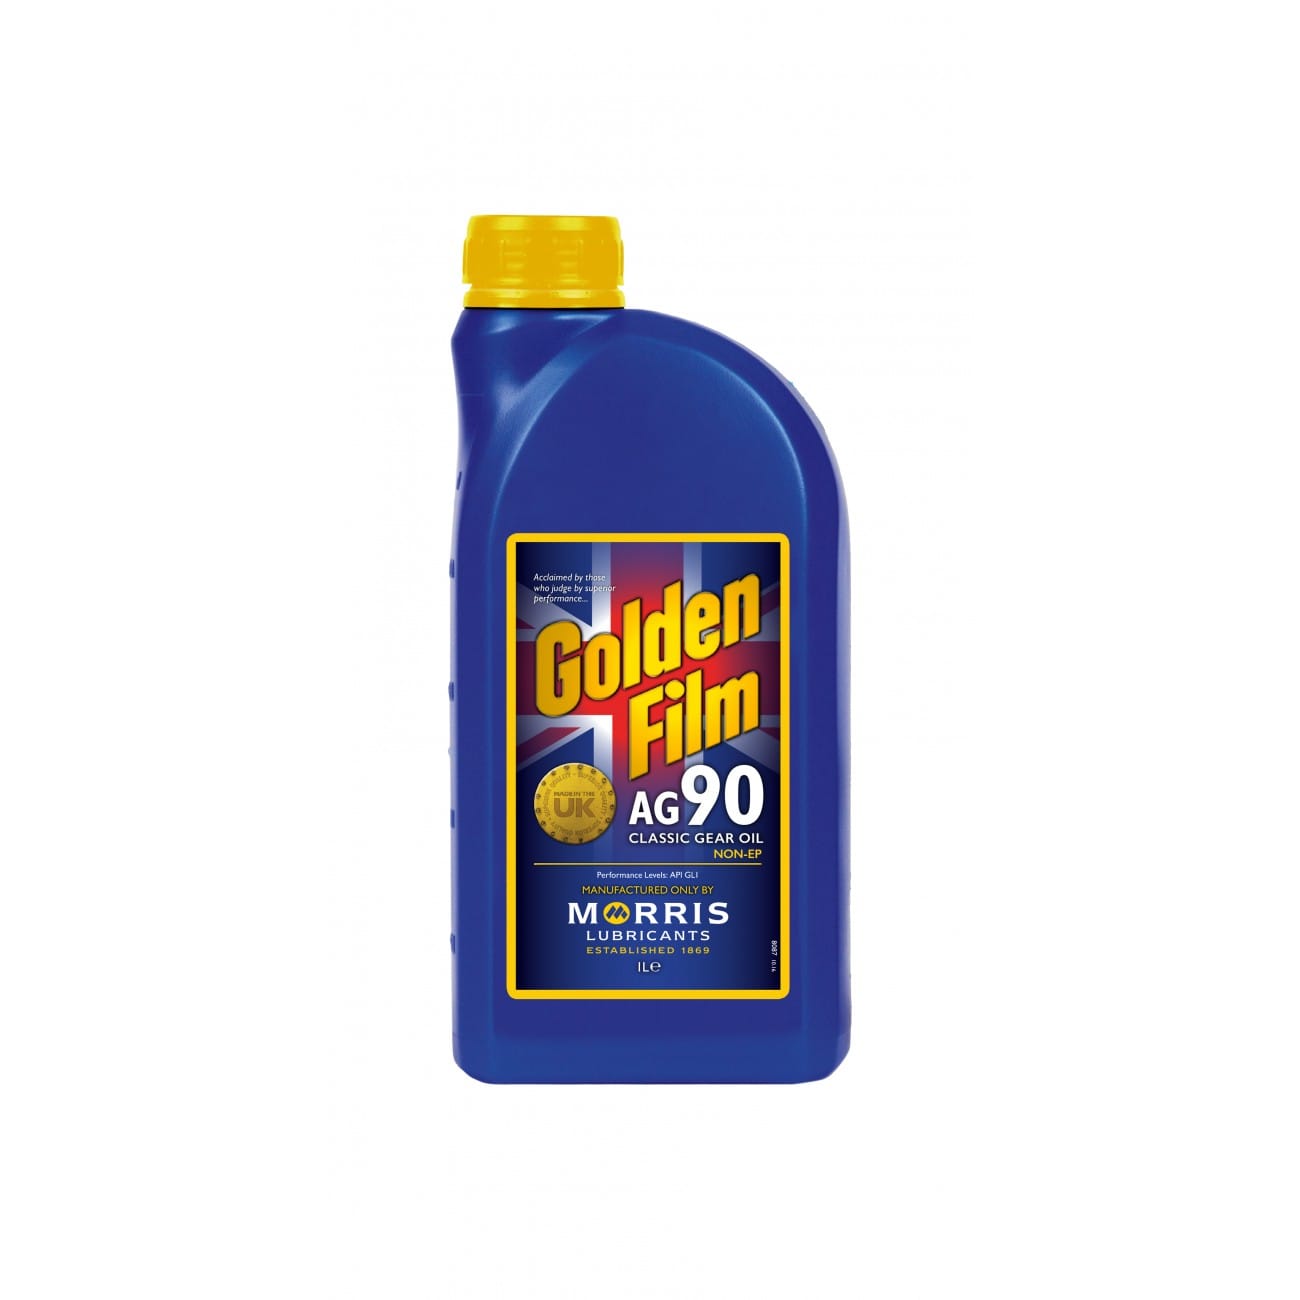 Golden Film AG90 Classic Gear Oil